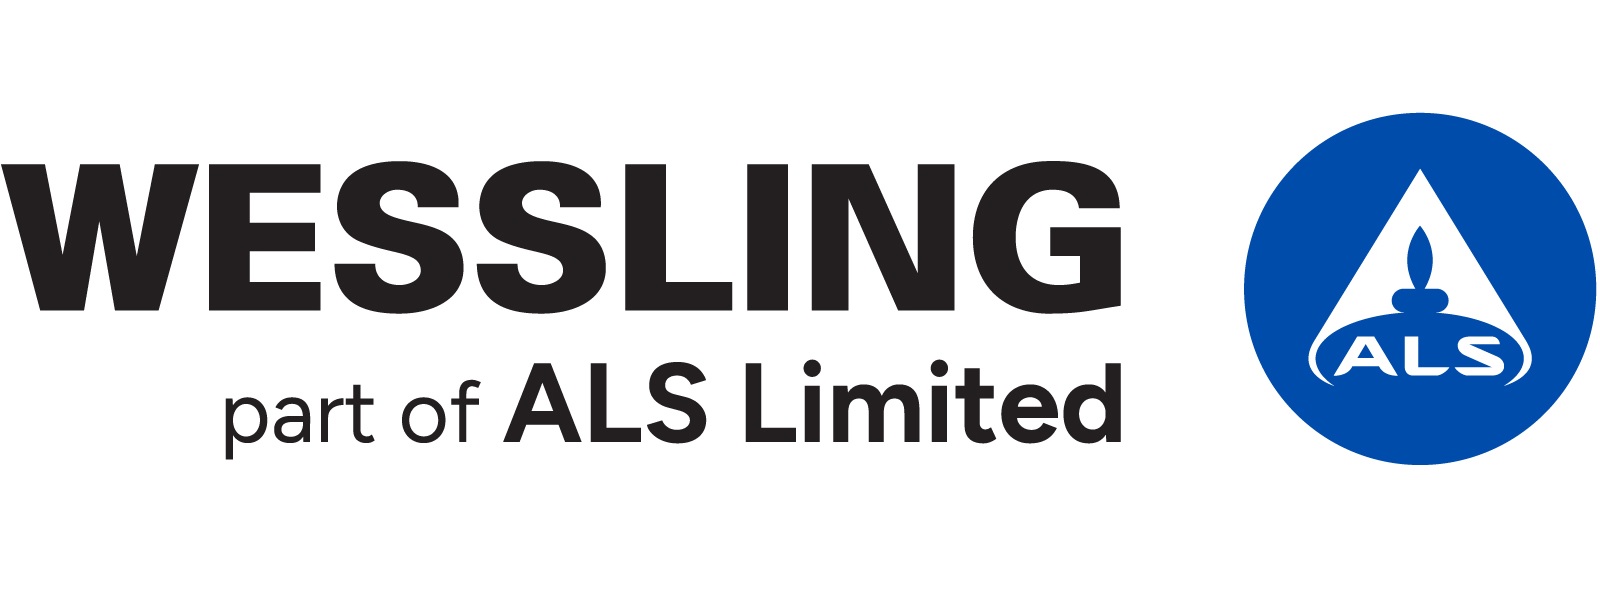 Wessling part of ALS Limited Logo